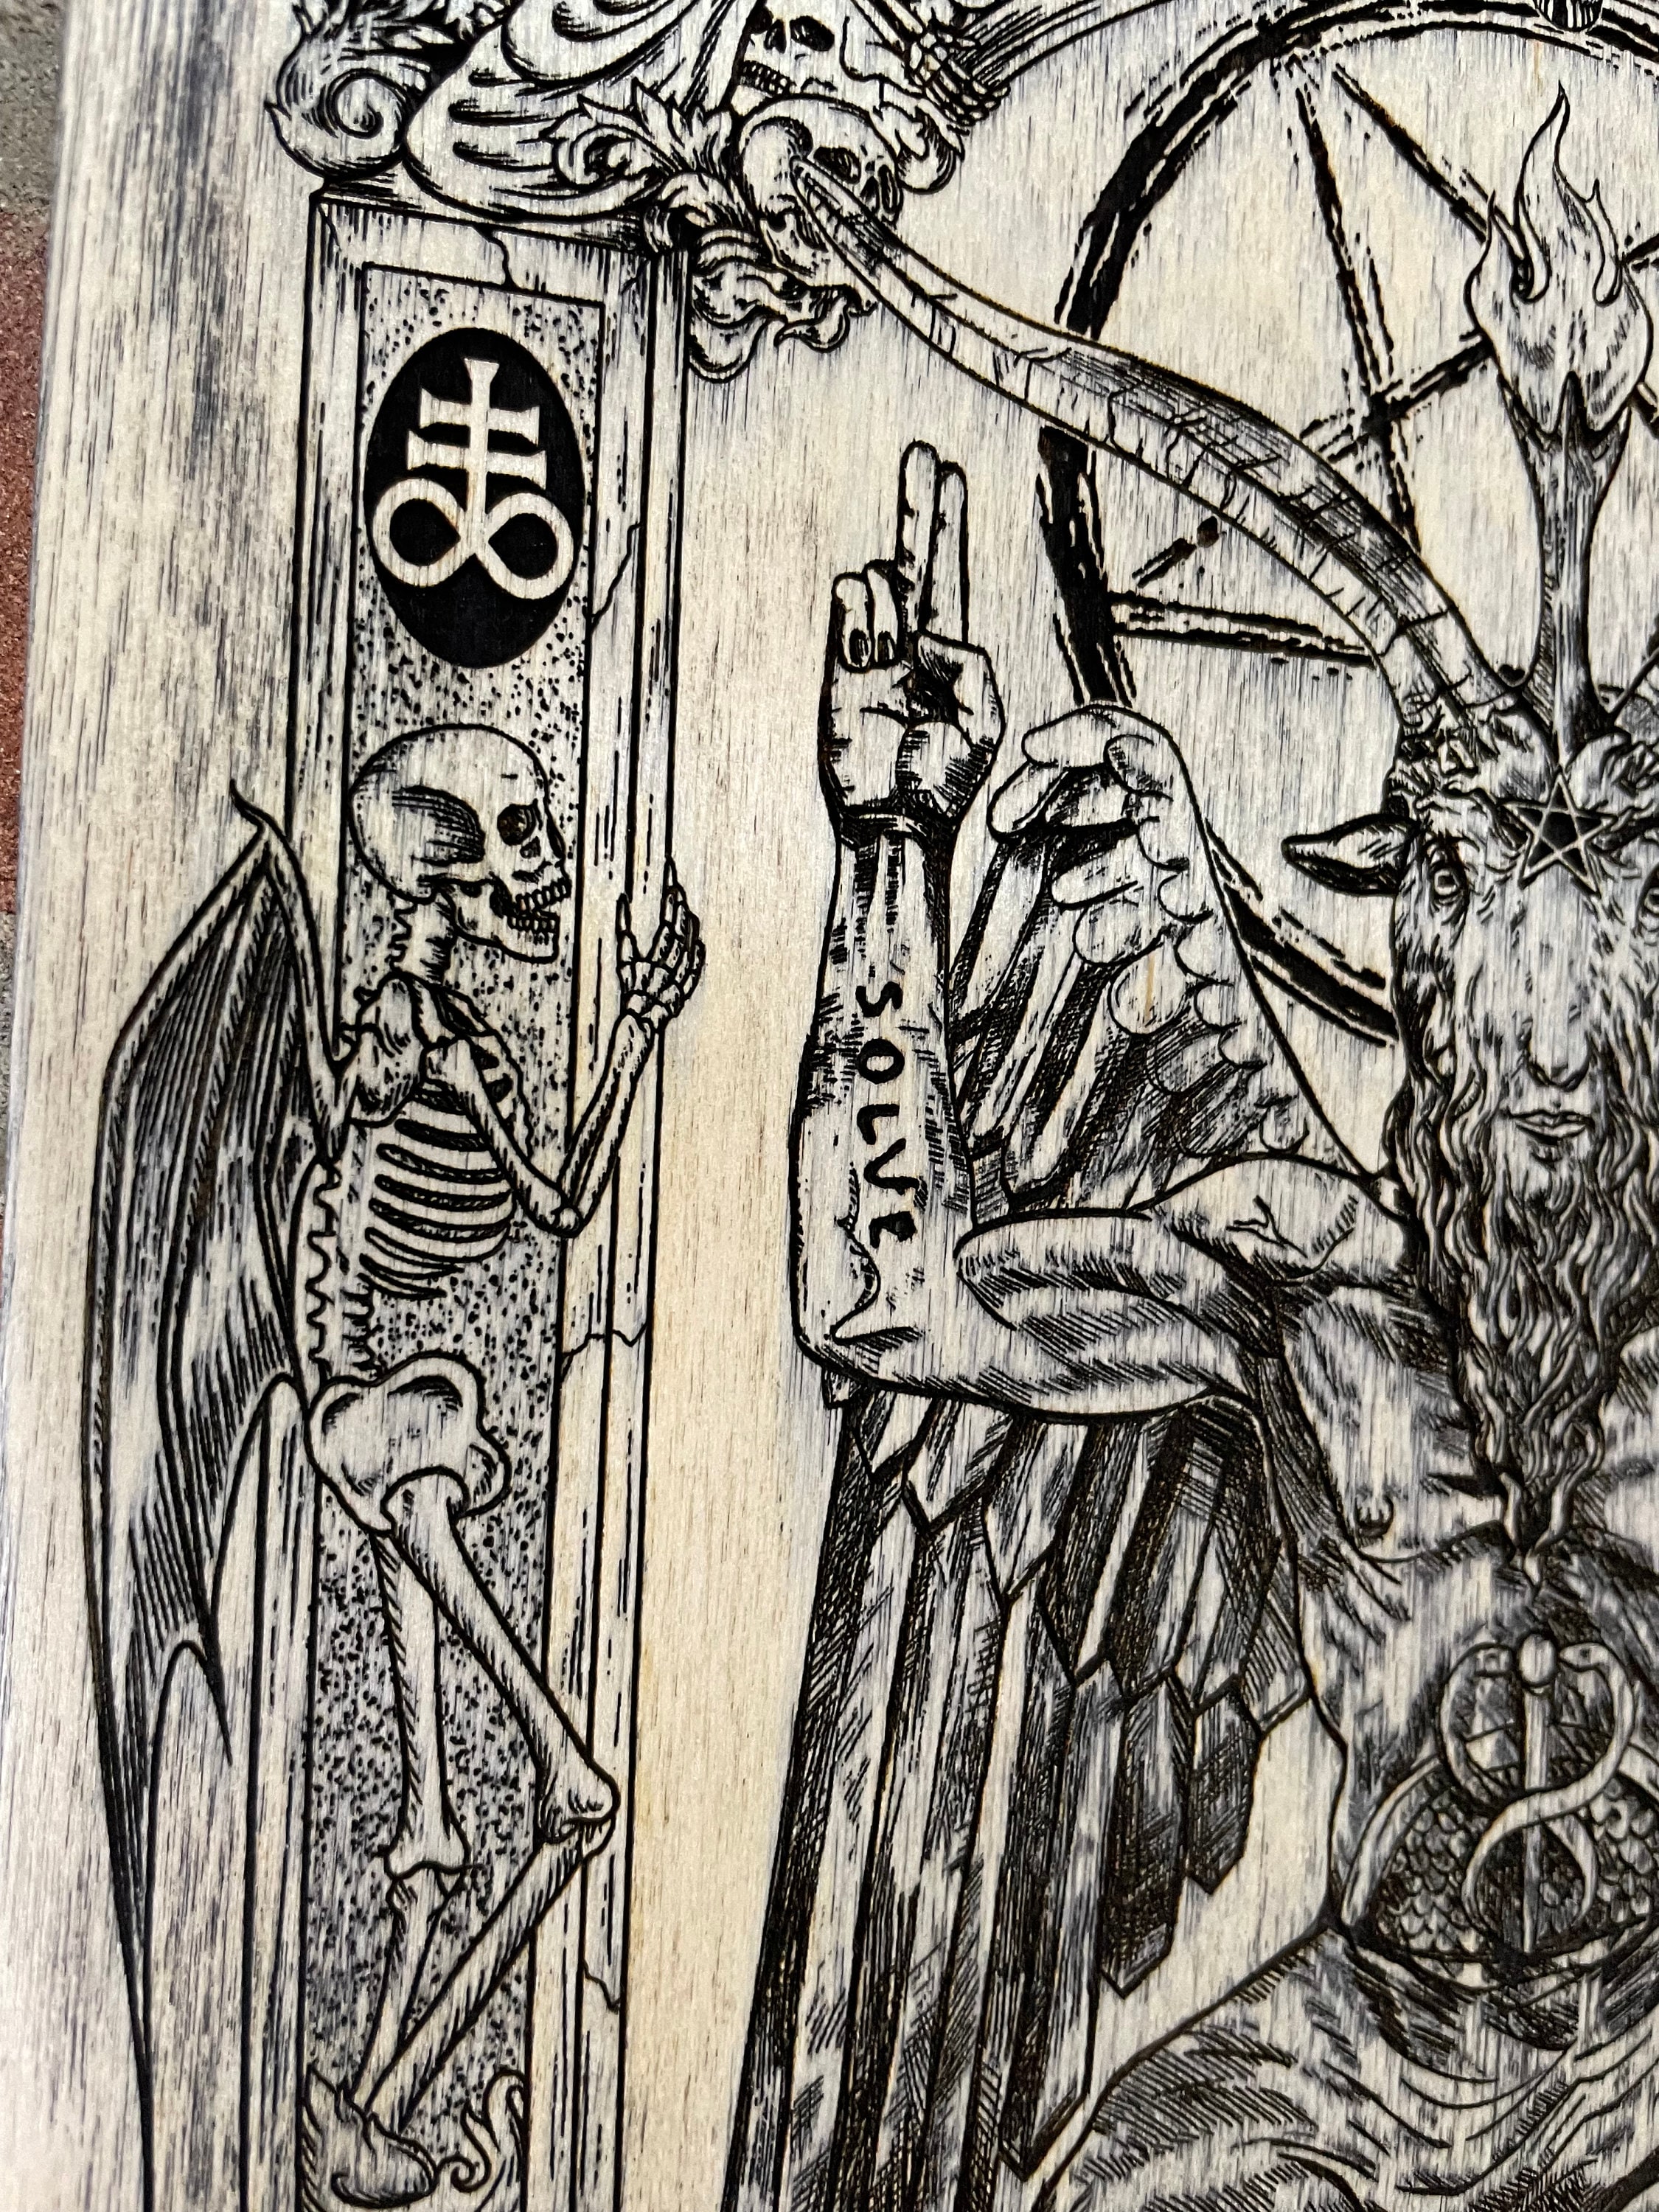 Baphomet Wall Art Engraved on Wood , Satanic Altar Decor, Lucifer Temple -   Denmark